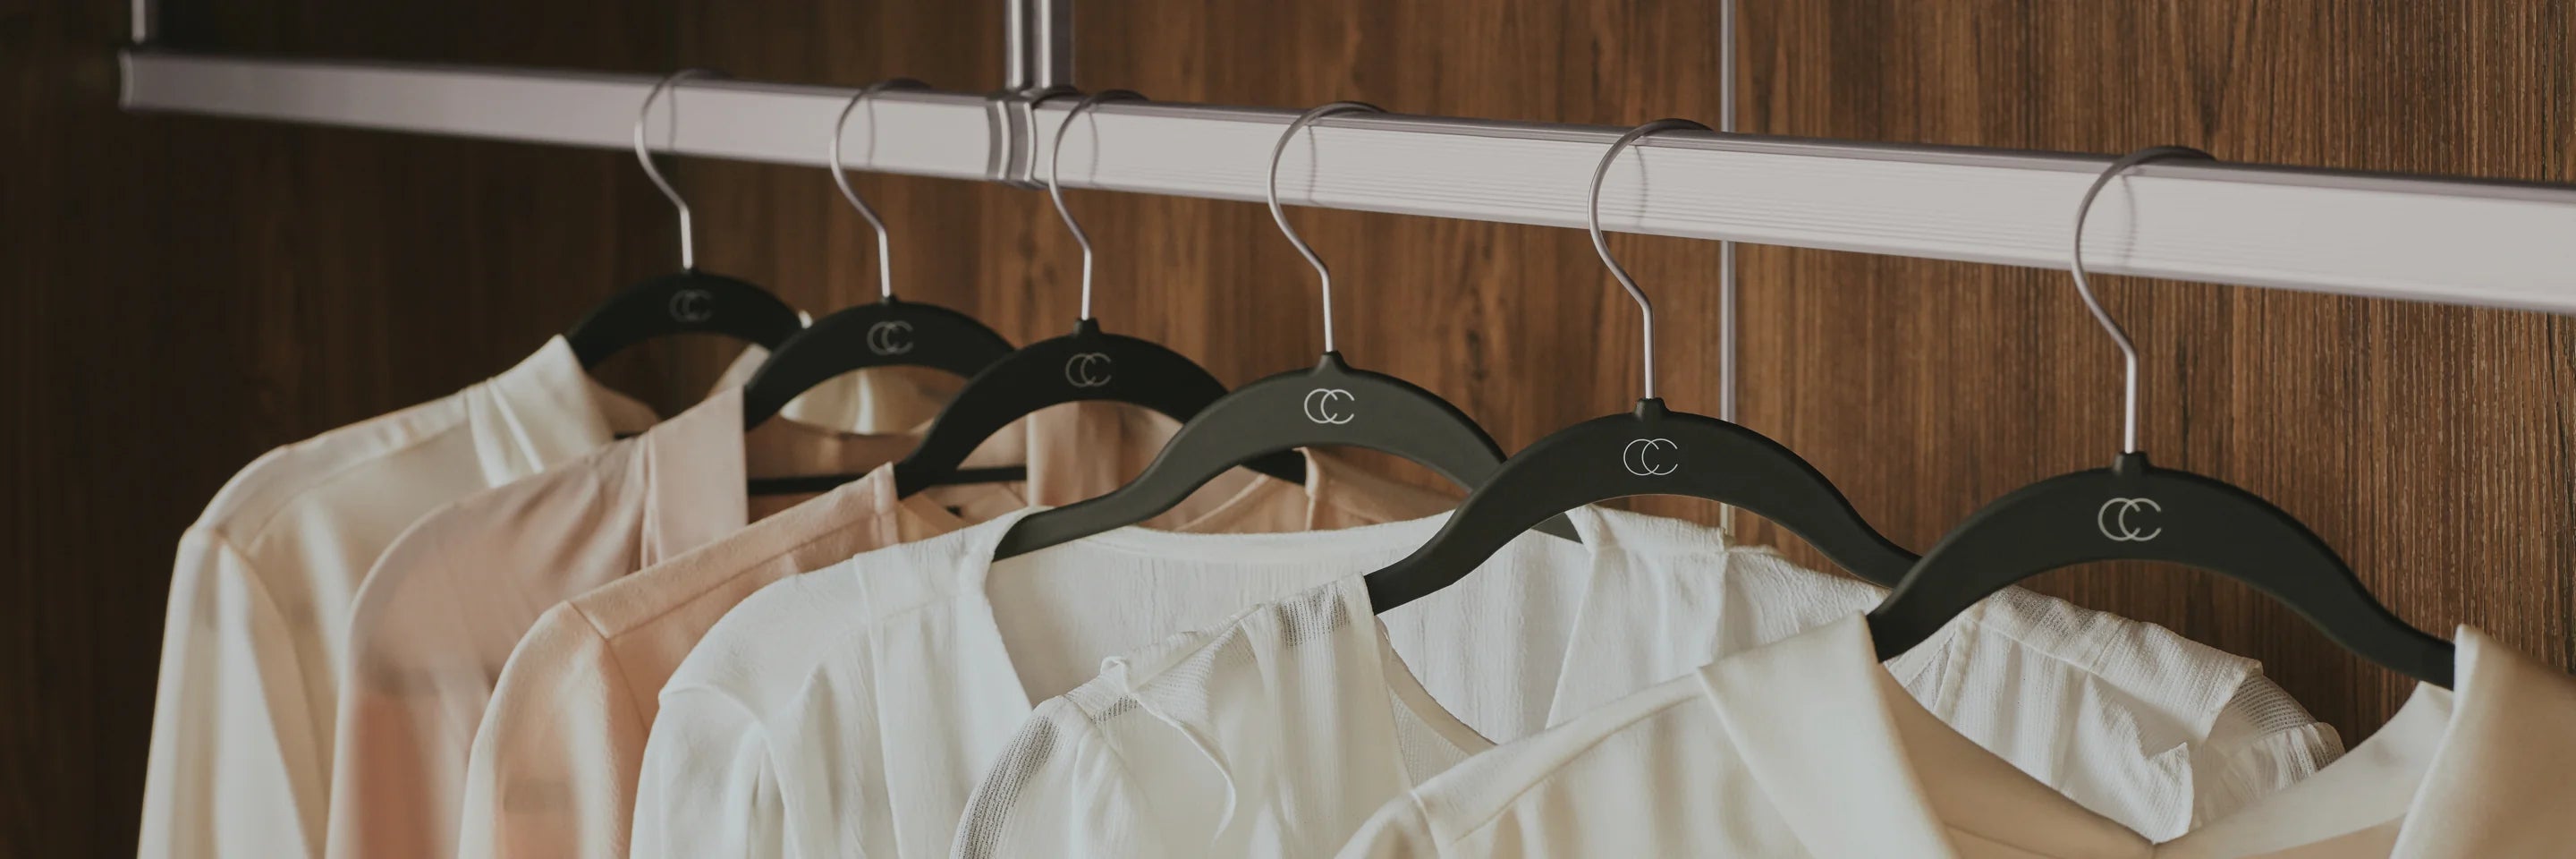 Space Saving Nonslip Shirt Hanger - by California Closets